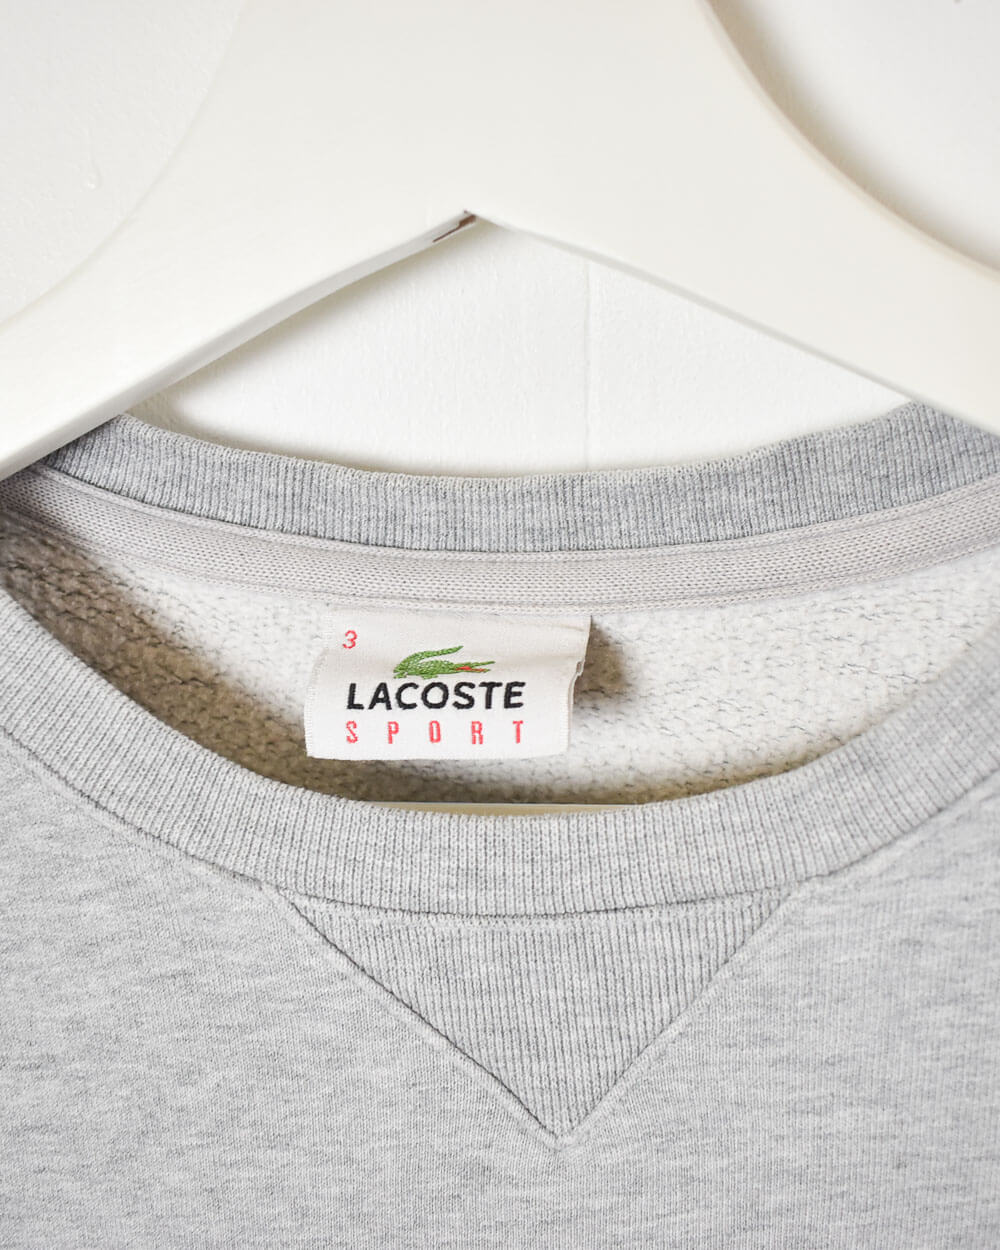 Stone Lacoste Sport Sweatshirt - Small